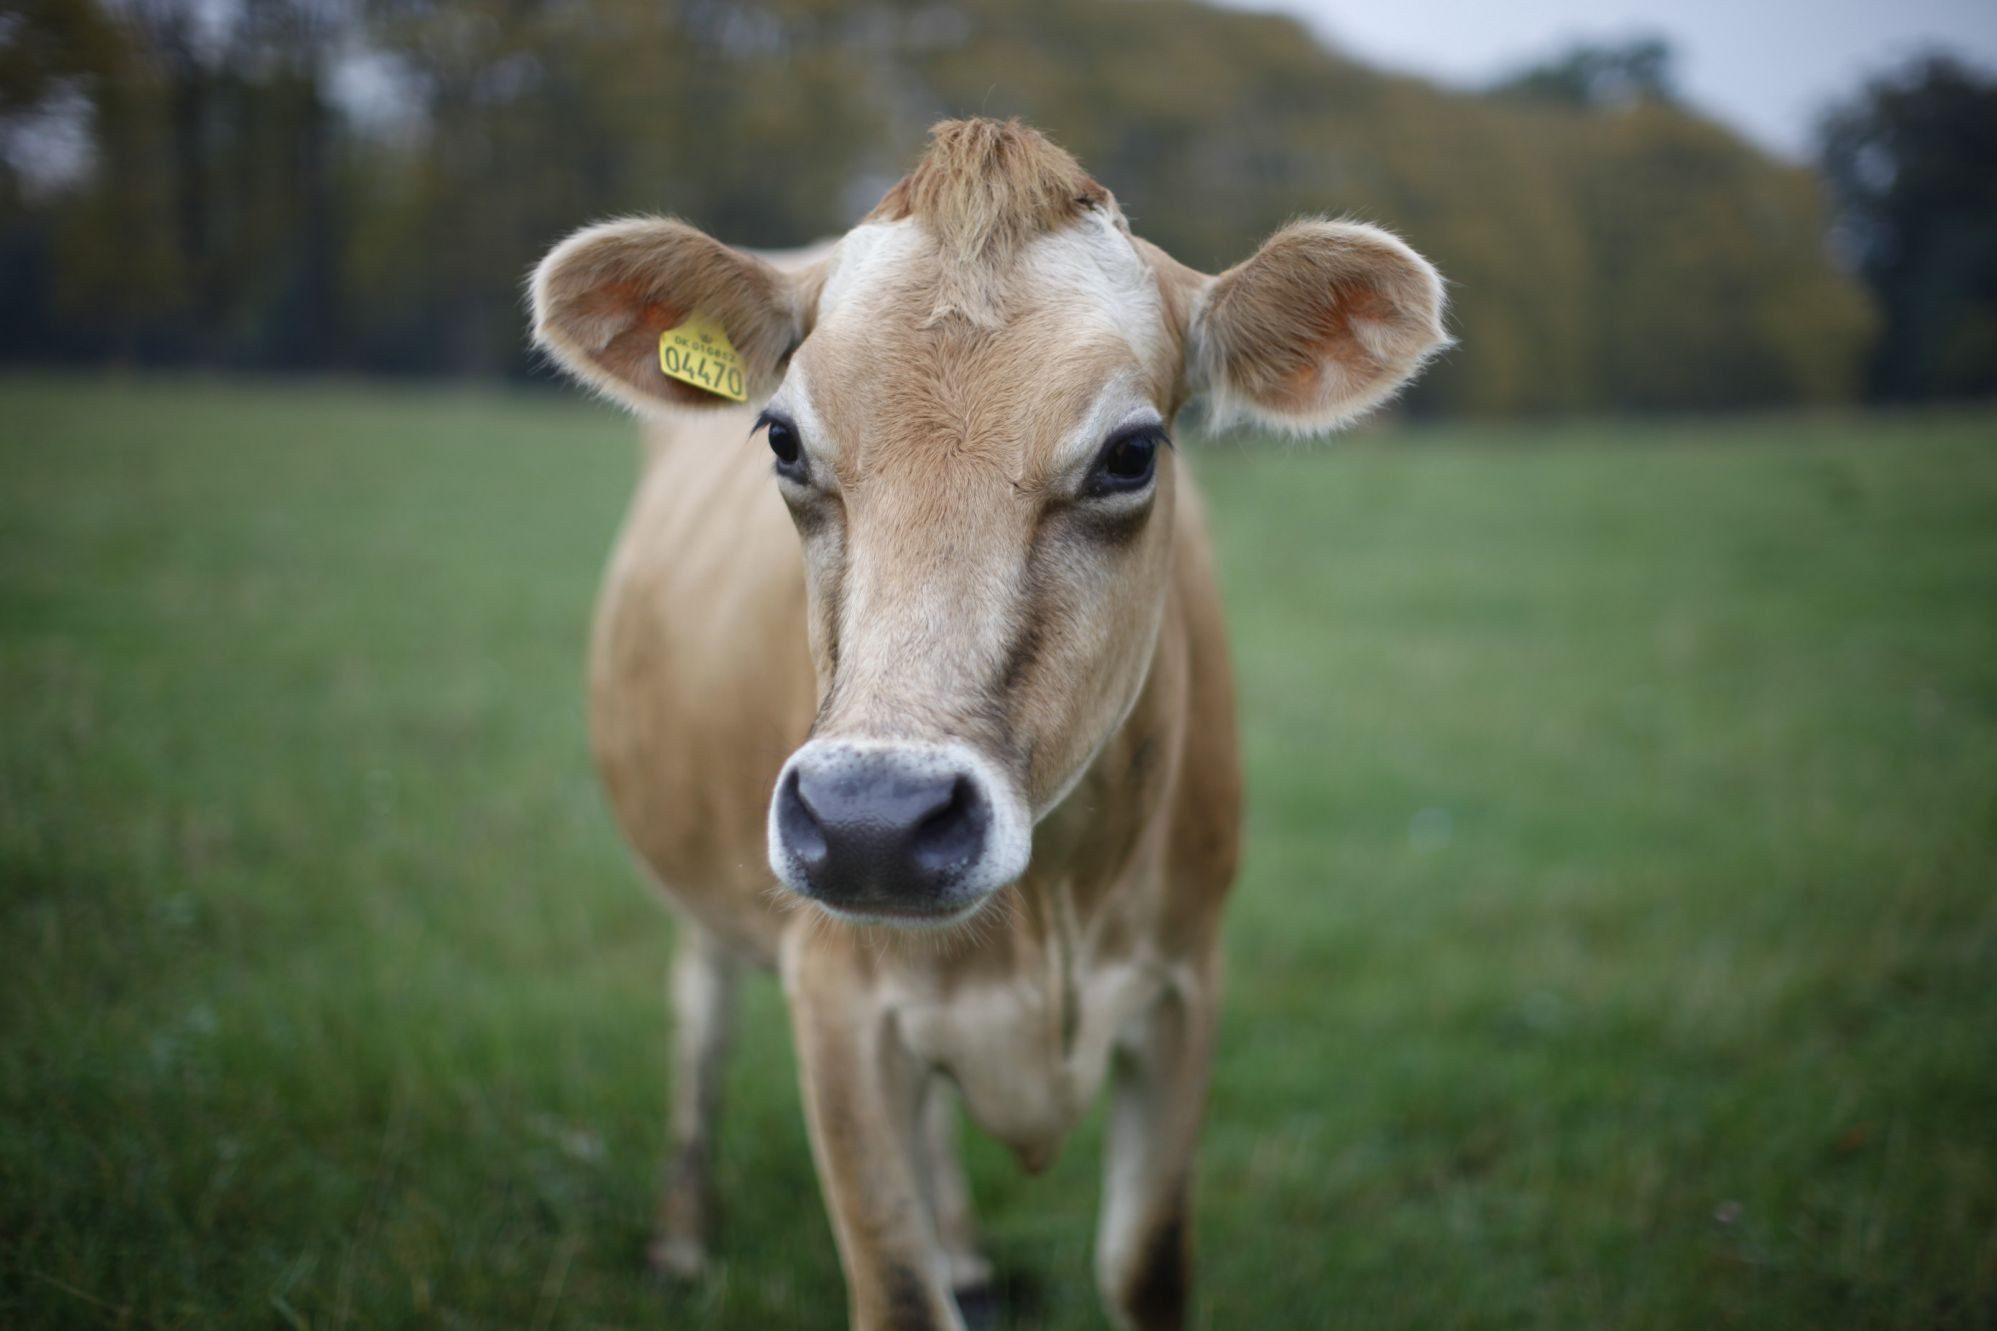 Free range dairy cow at Svanhold Gods organic farm, Denmark